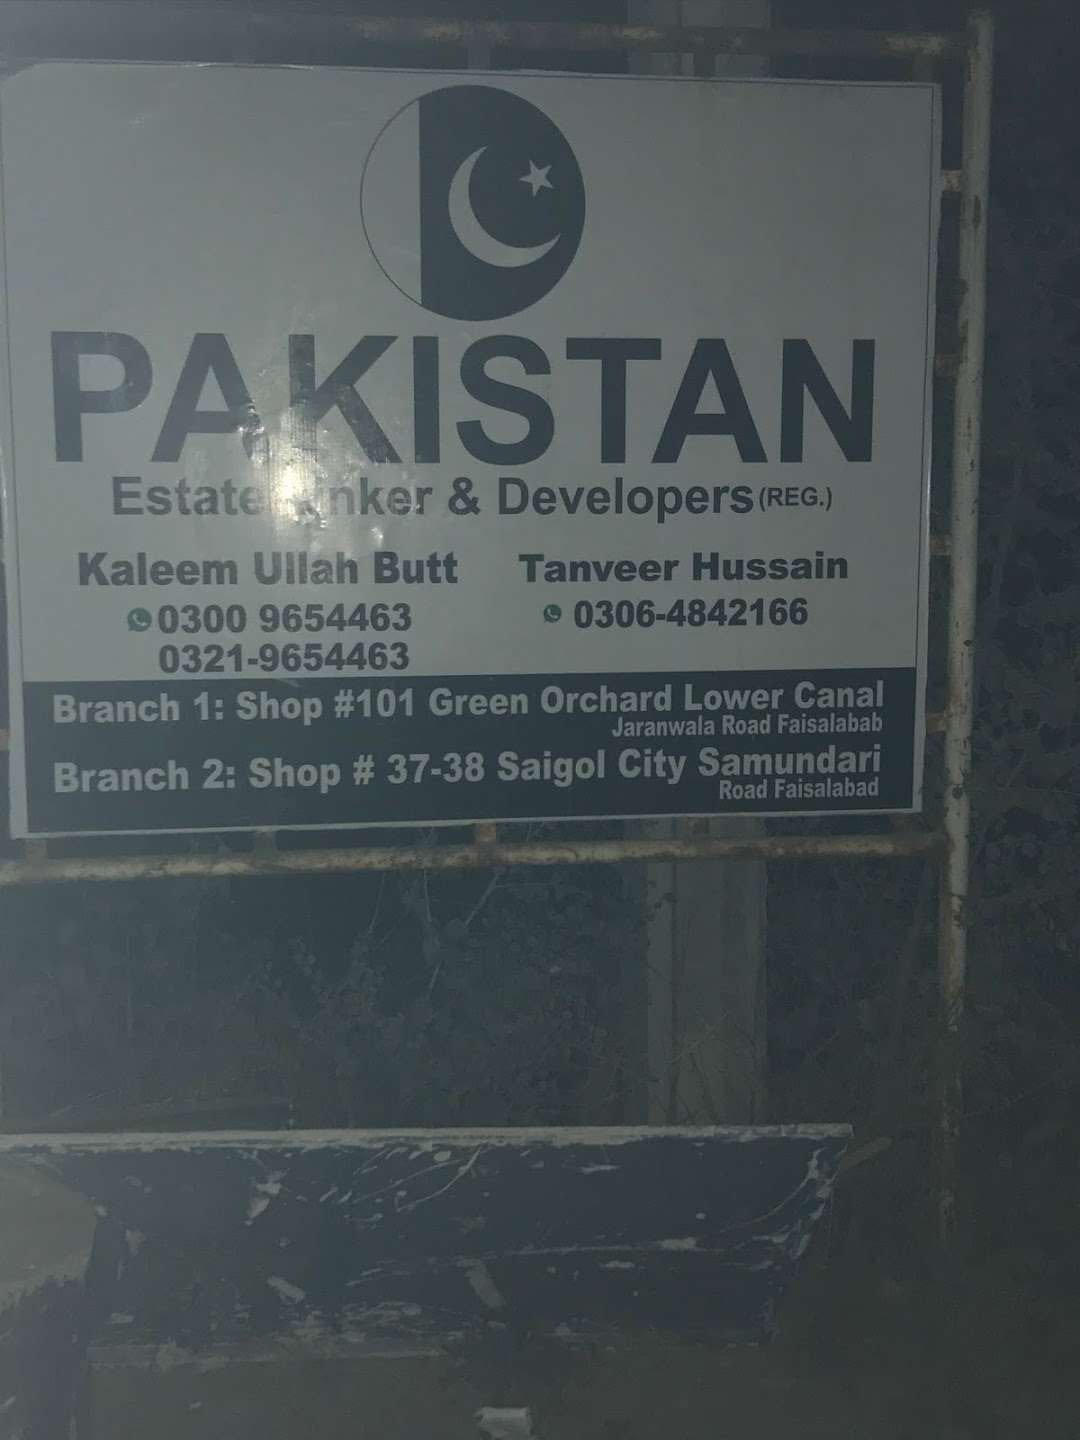 Pakistan Estate Linker & Developer